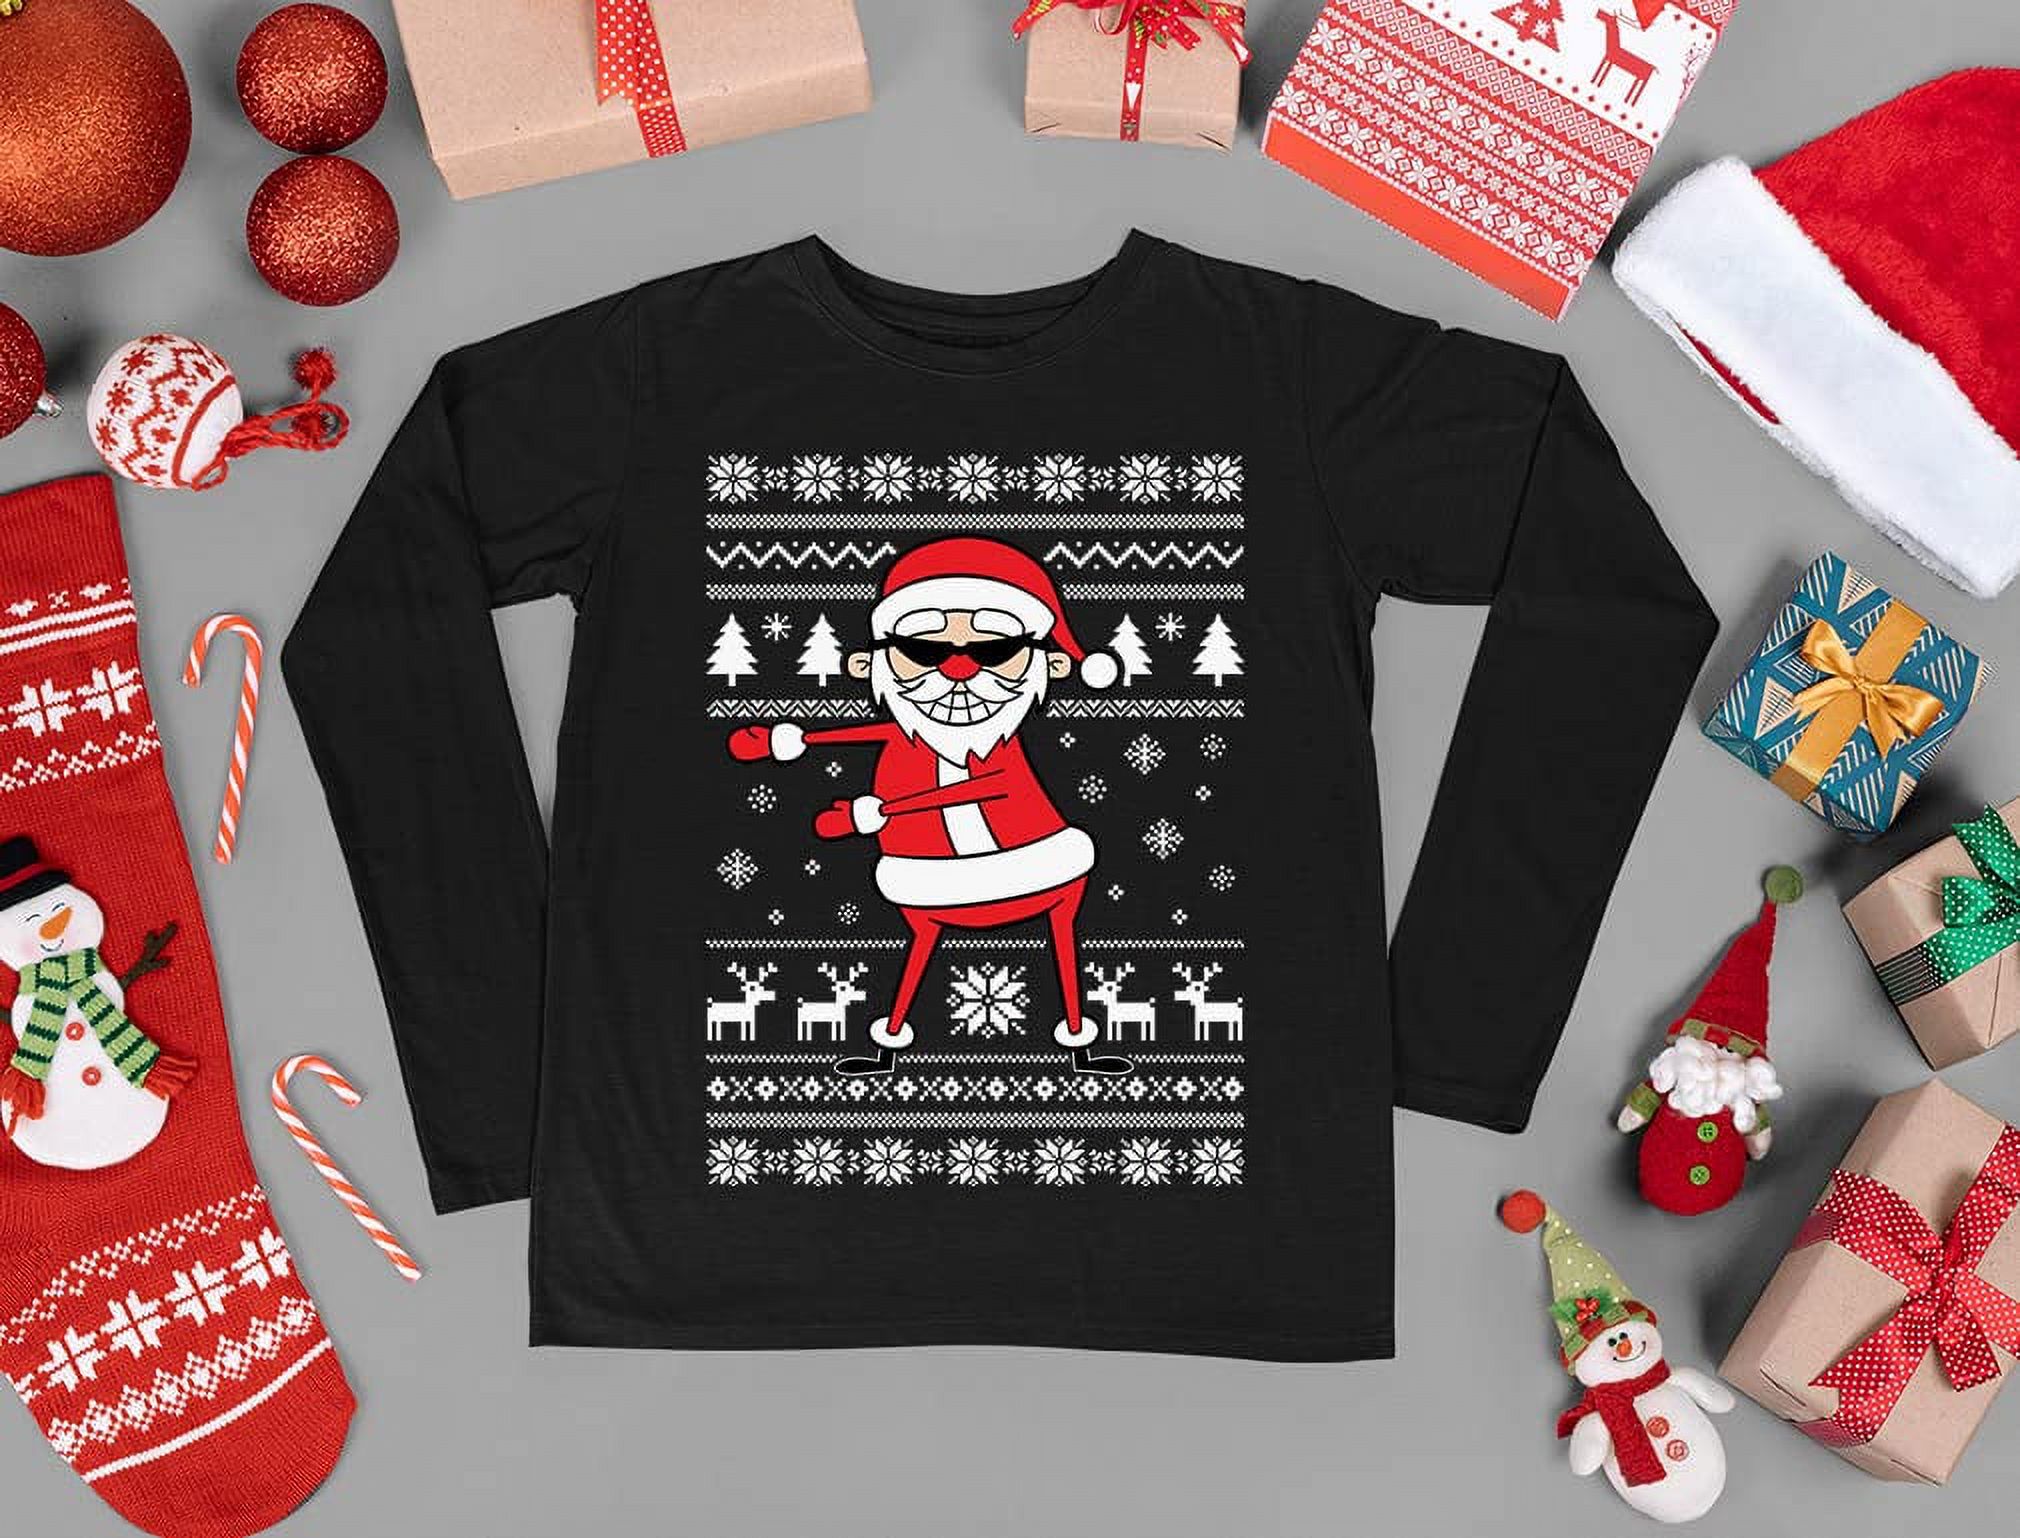 Tstars Boys Unisex Ugly Christmas Sweater Santa Floss Kids Christmas Gift Funny Humor Holiday Shirts Xmas Party Christmas Gifts for Boy Toddler Kids Long Sleeve T Shirt Ugly Xmas Sweater - image 4 of 6